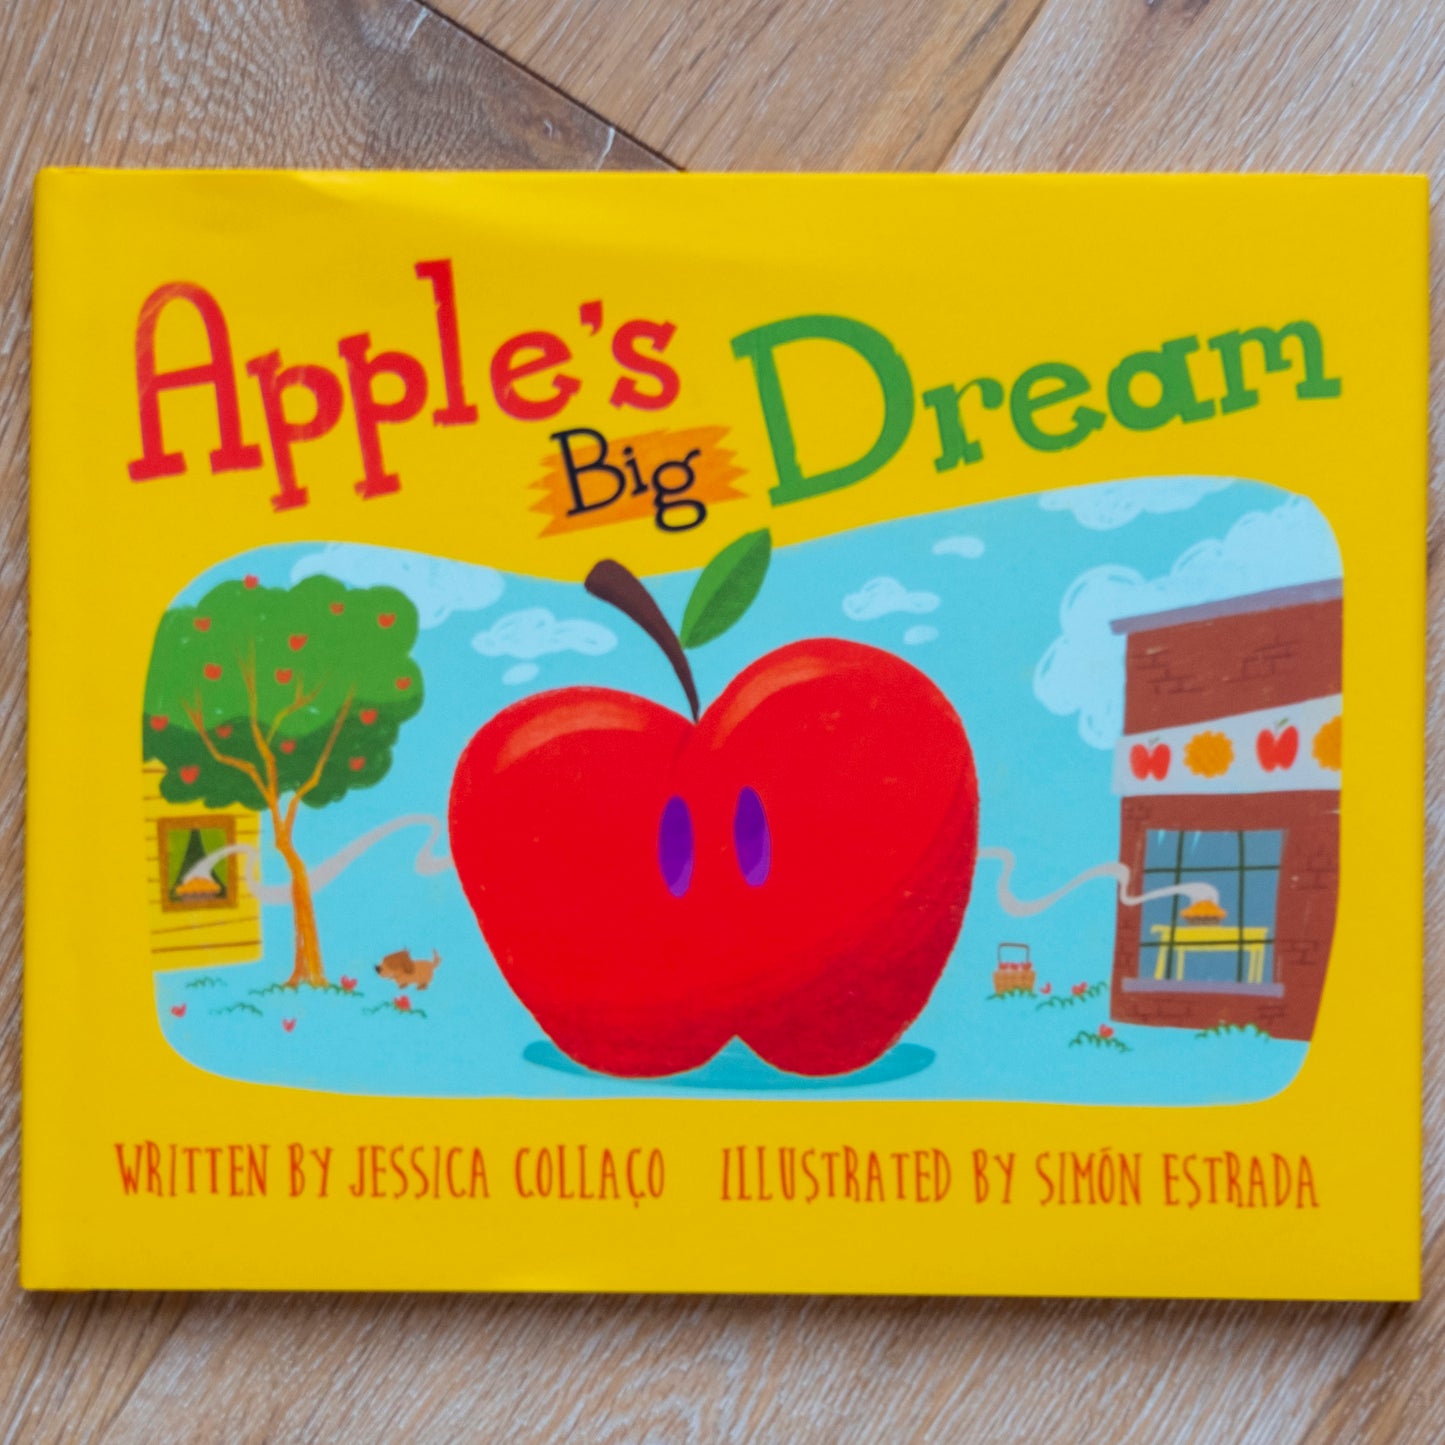 Apple's Big Dream